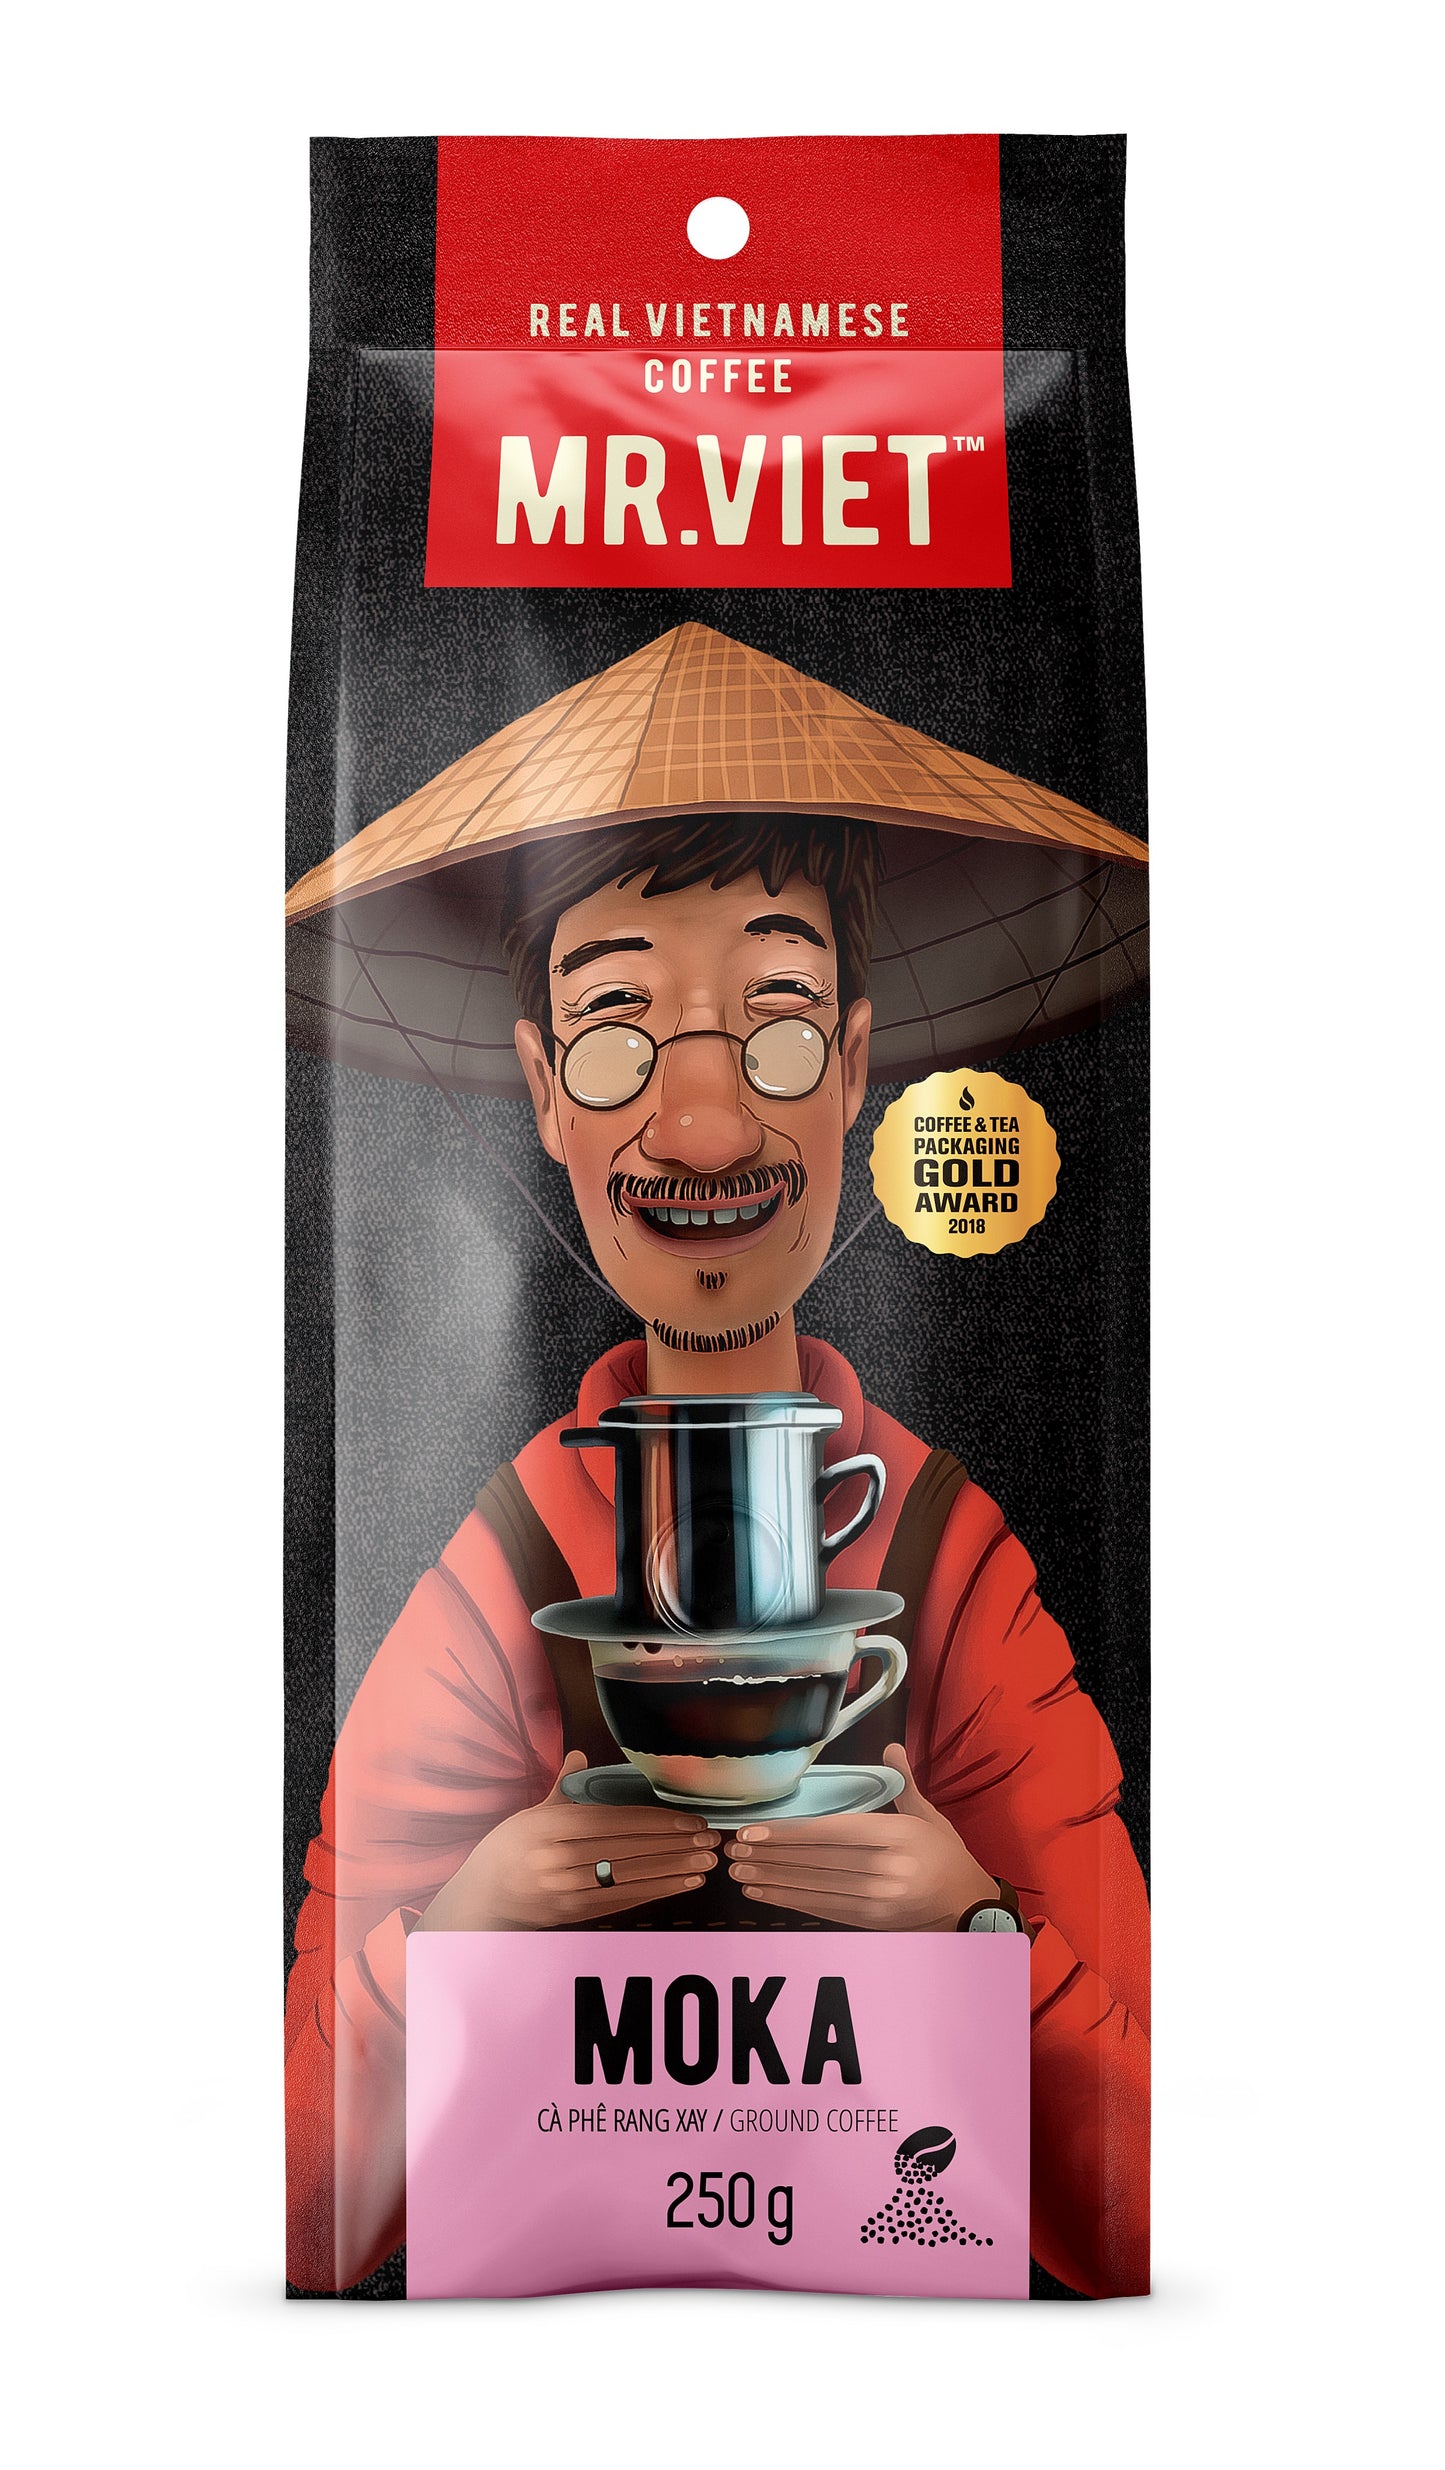 Mr.Viet "Moka" ground coffee 250g